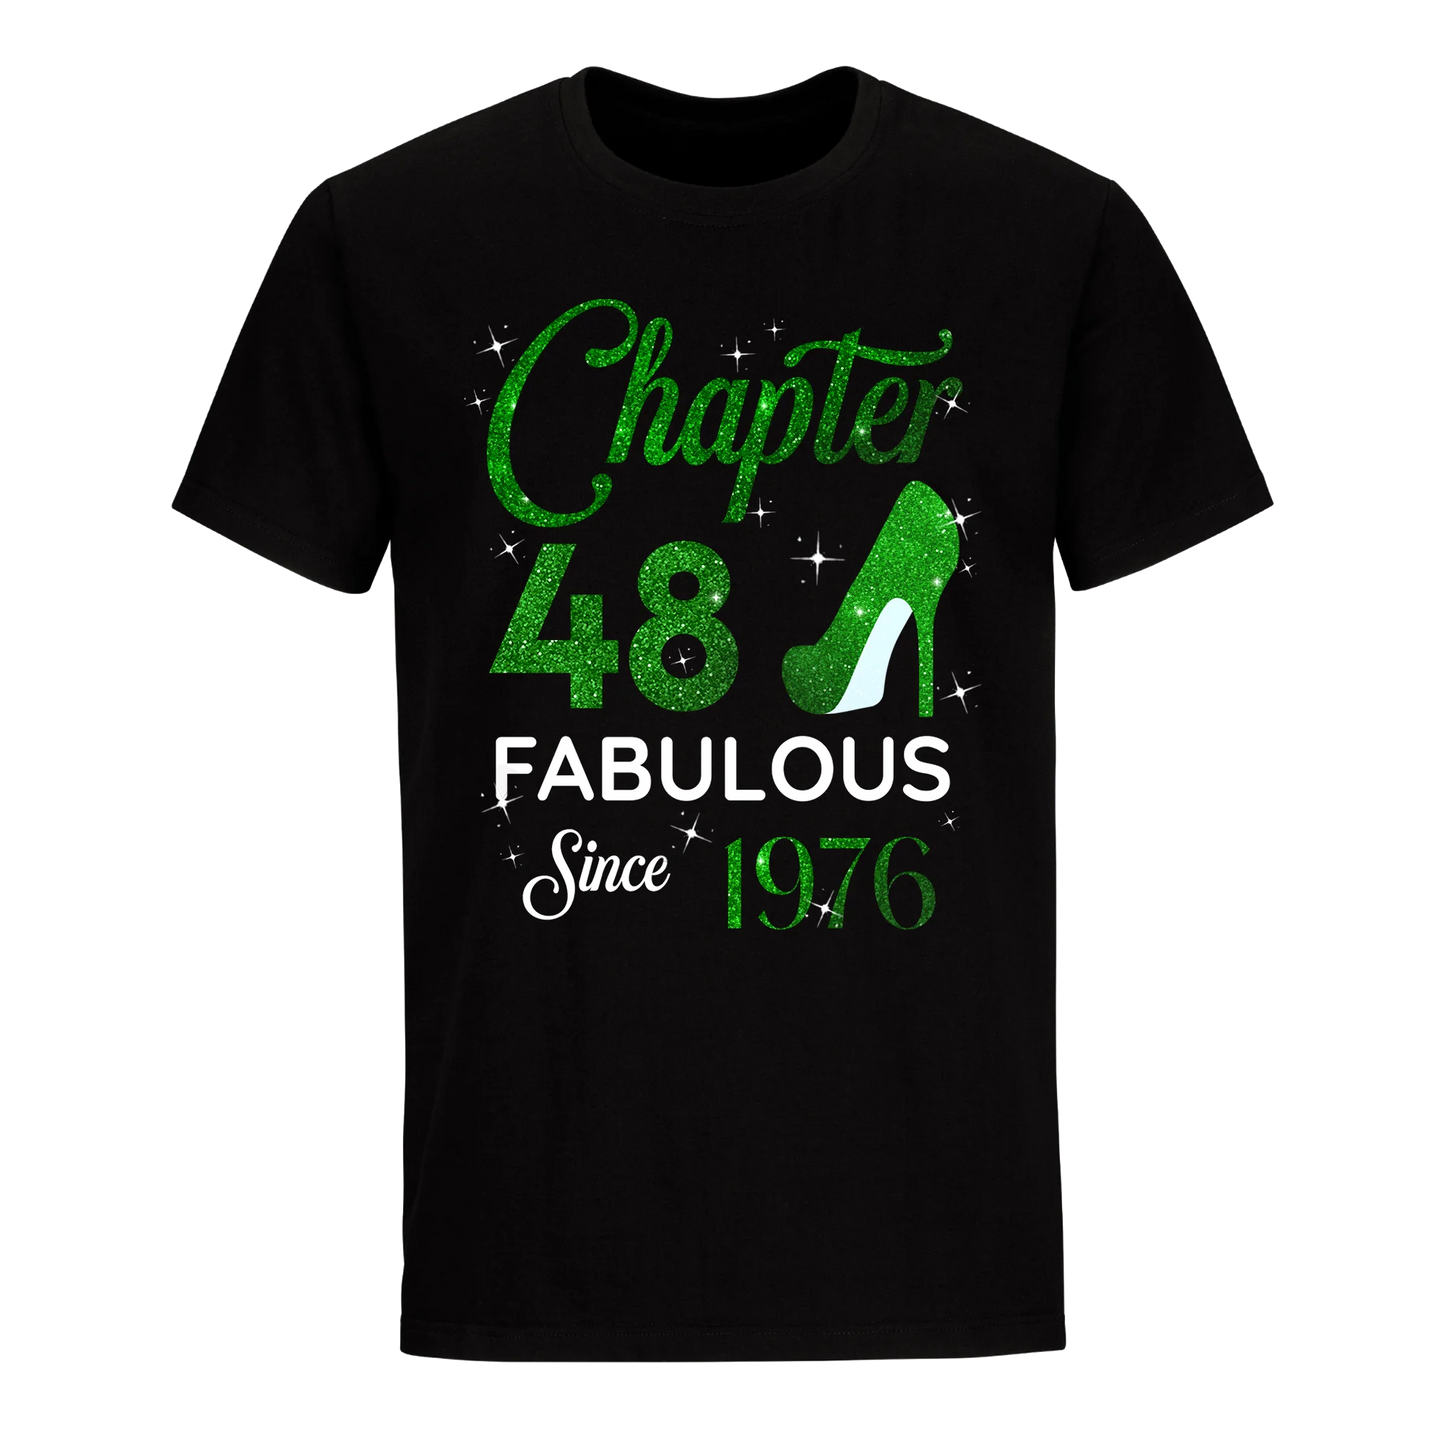 CHAPTER 48 FABULOUS SINCE 1976 UNISEX SHIRT GREEN